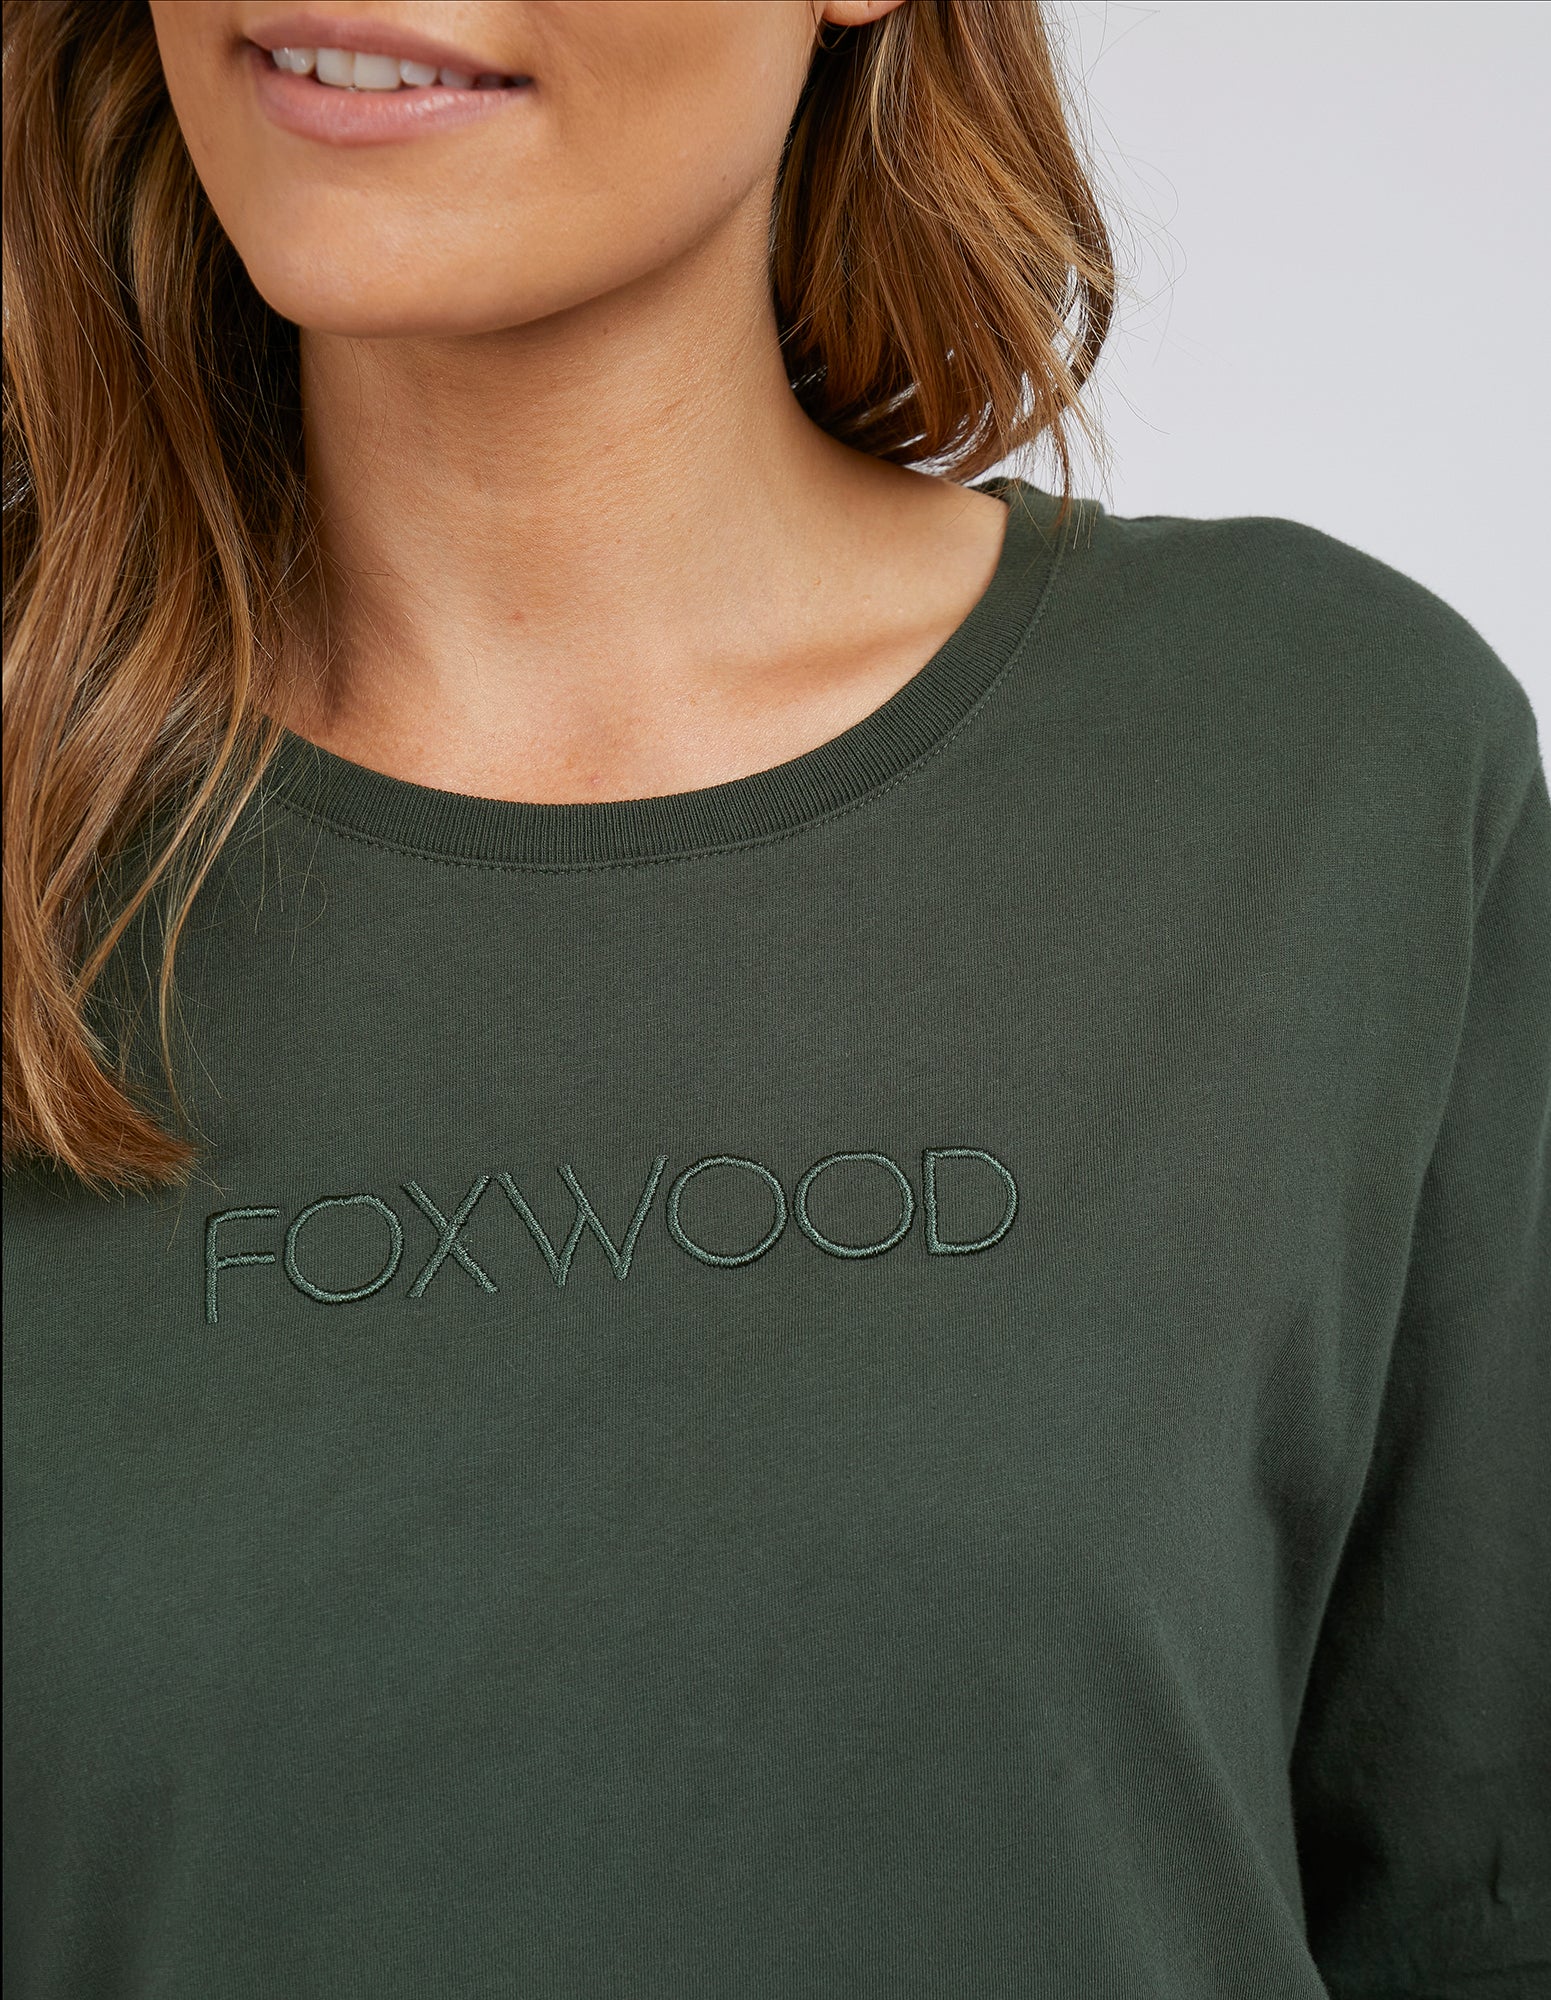 Foxwood L/S Tee - Khaki - Foxwood - FUDGE Gifts Home Lifestyle